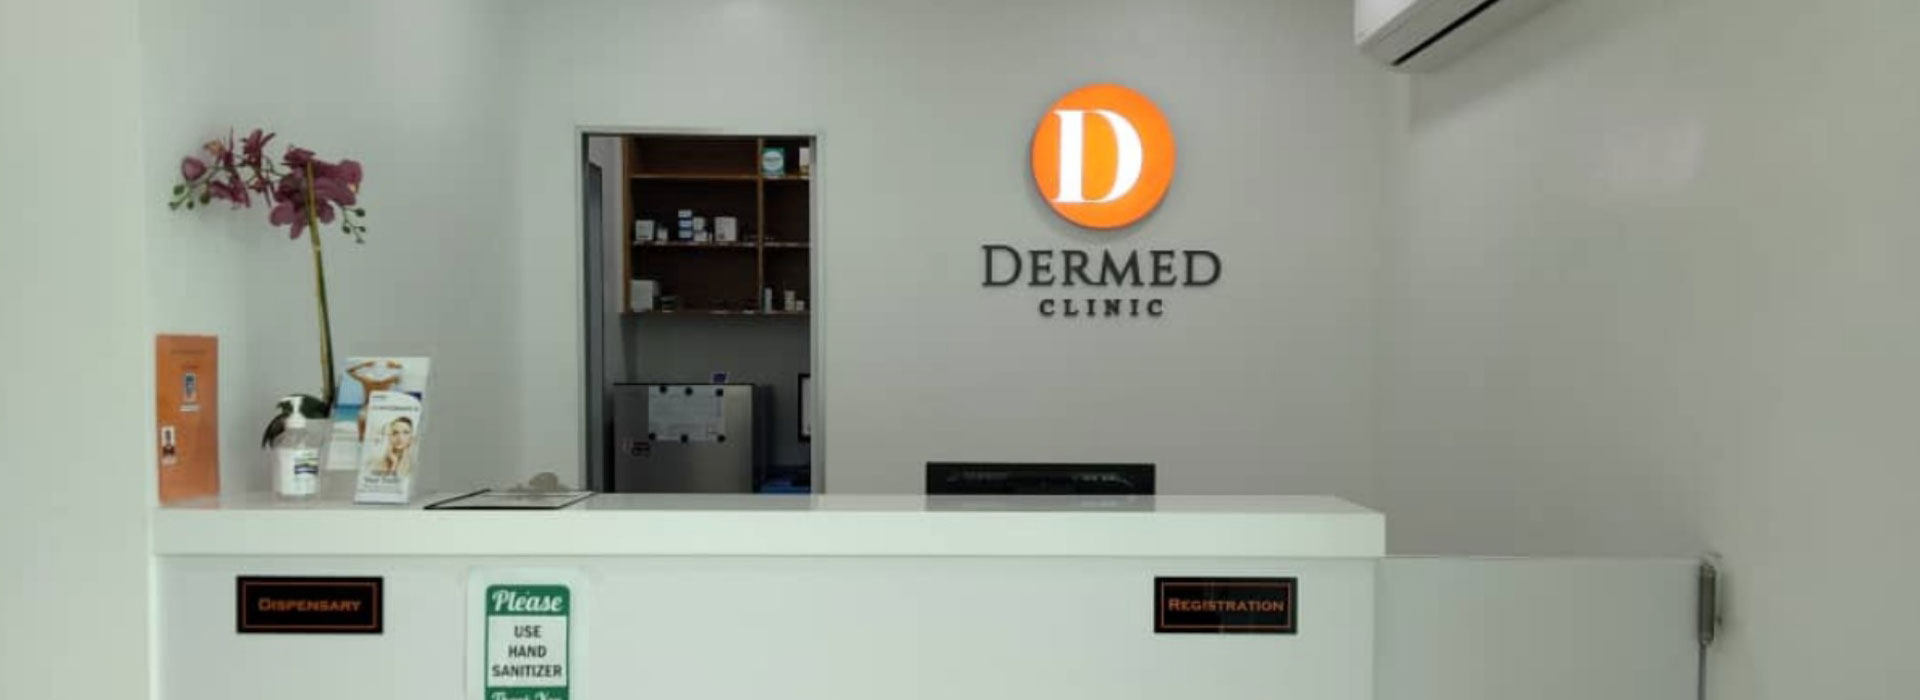 Dermed Clinic Reception Area